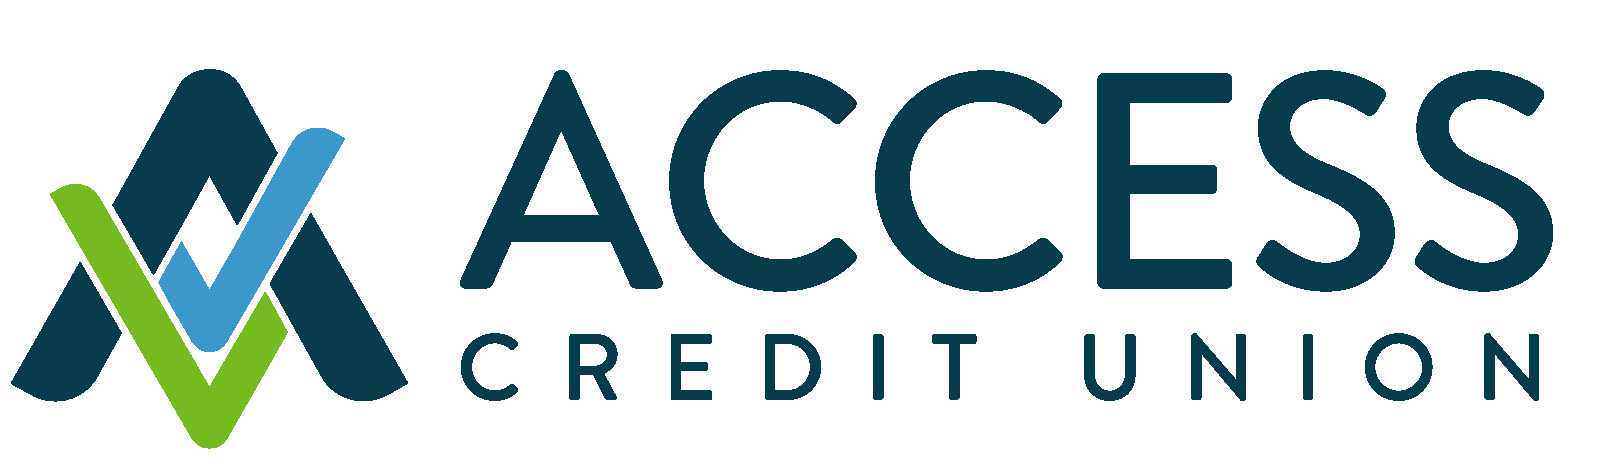 ACCESS Credit Union